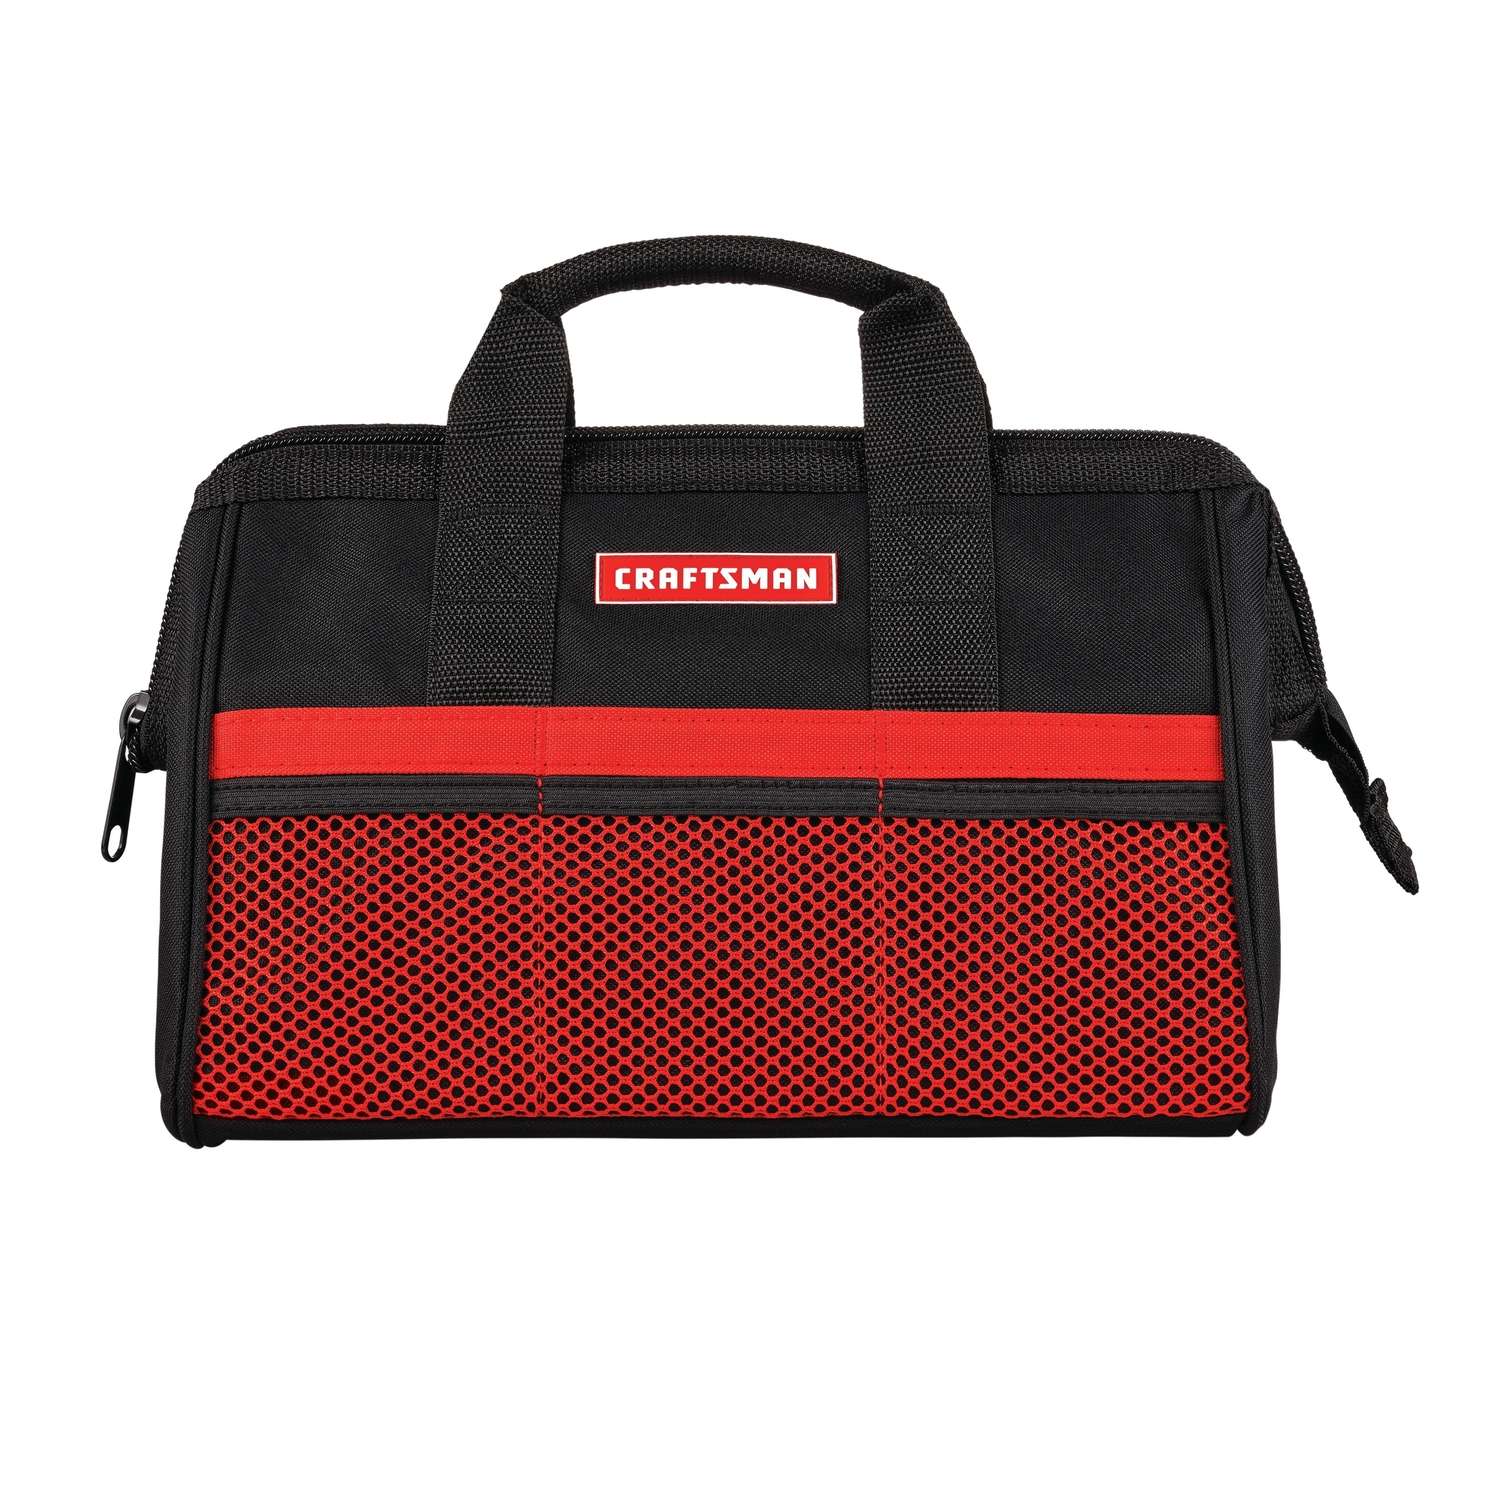 Craftsman 13 in. W Wide Mouth Tool Bag 6 pocket (Black/Red)